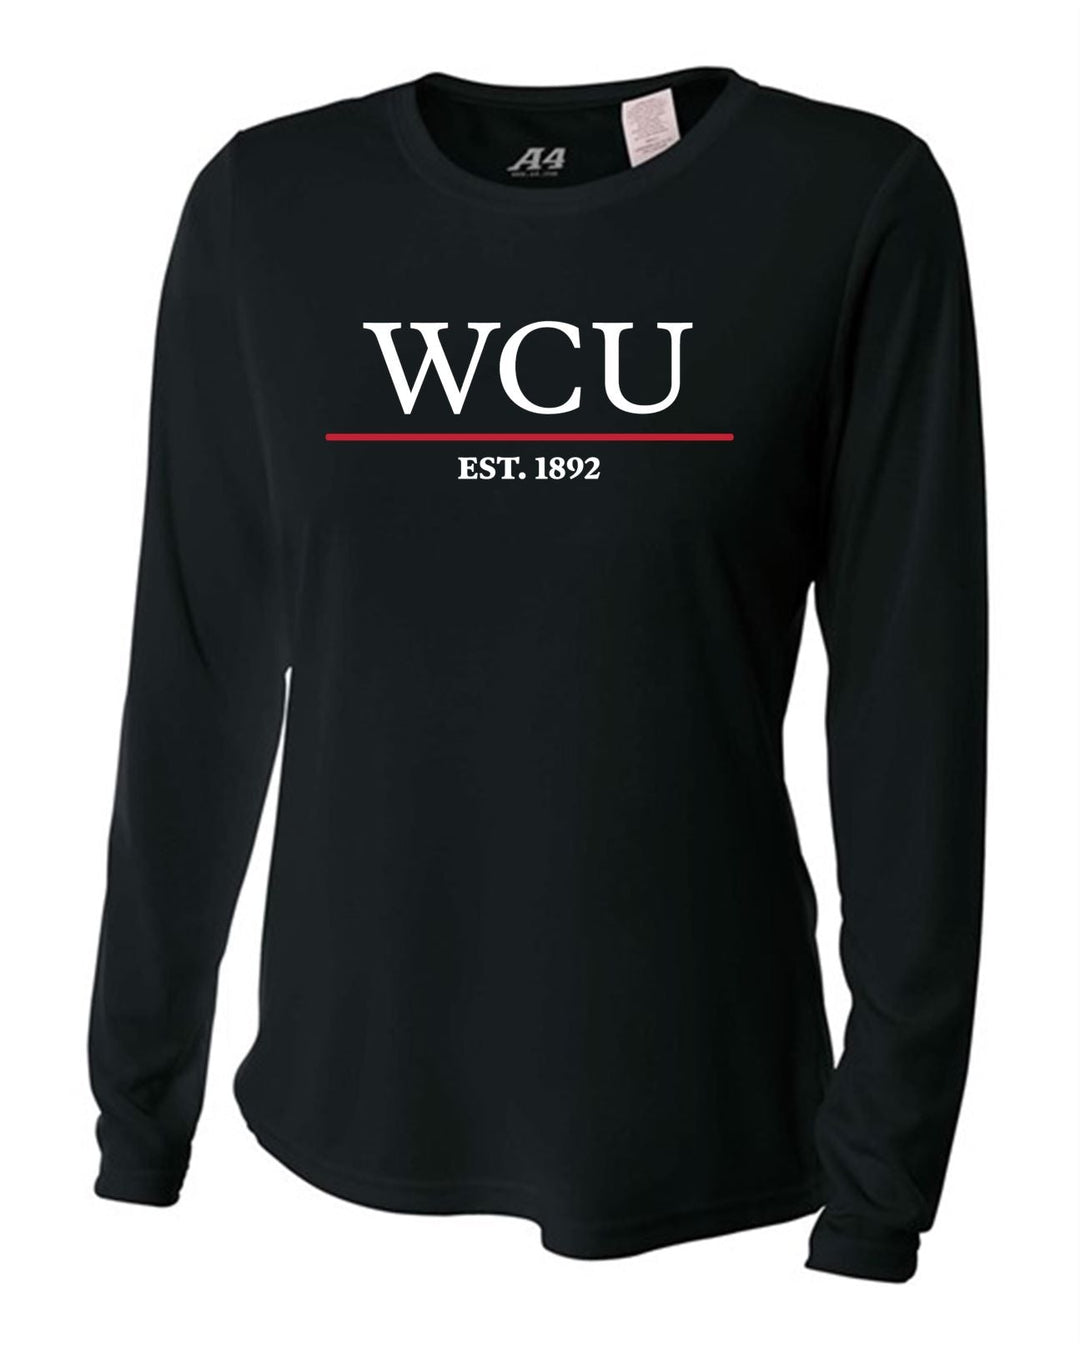 WCU College Of Osteopathic Medicine Women's Long-Sleeve Performance Shirt WCU OM Black Womens Small - Third Coast Soccer